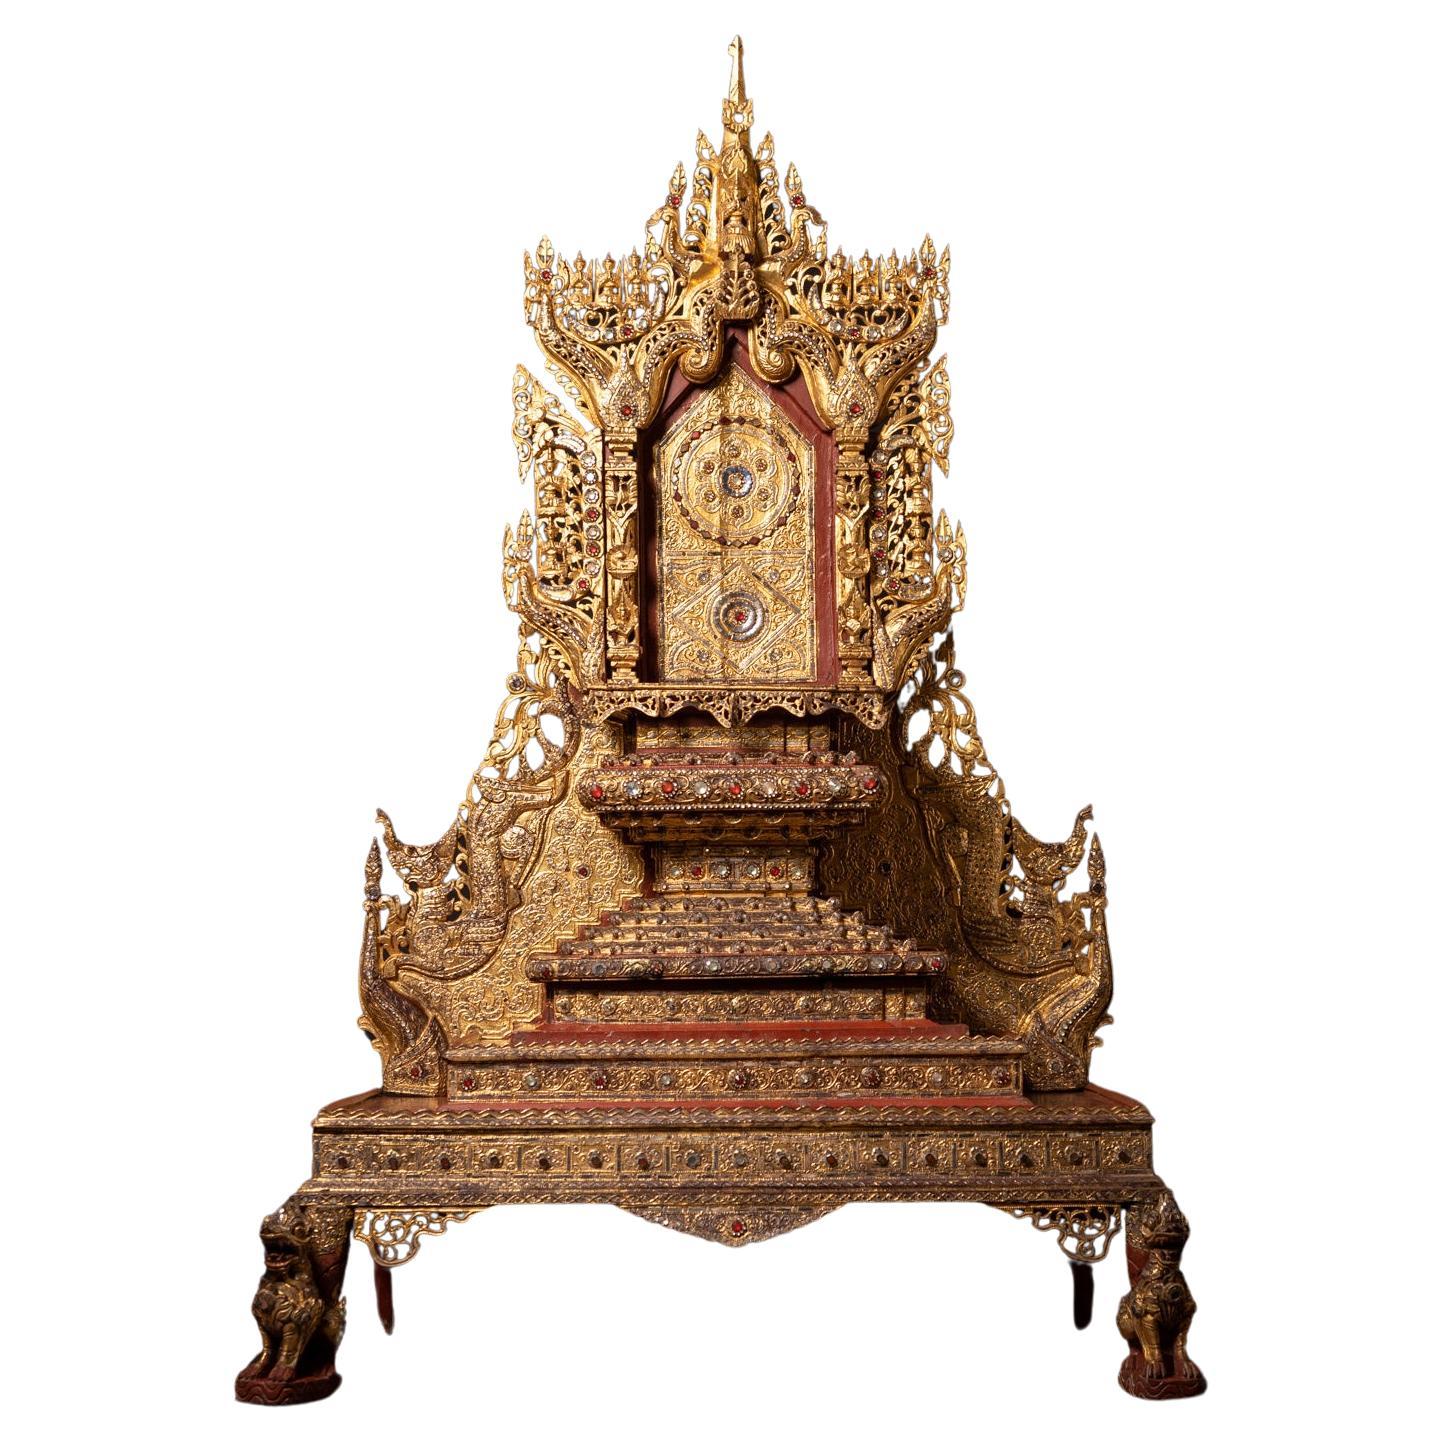 19th century Large Antique Burmese Throne from Burma